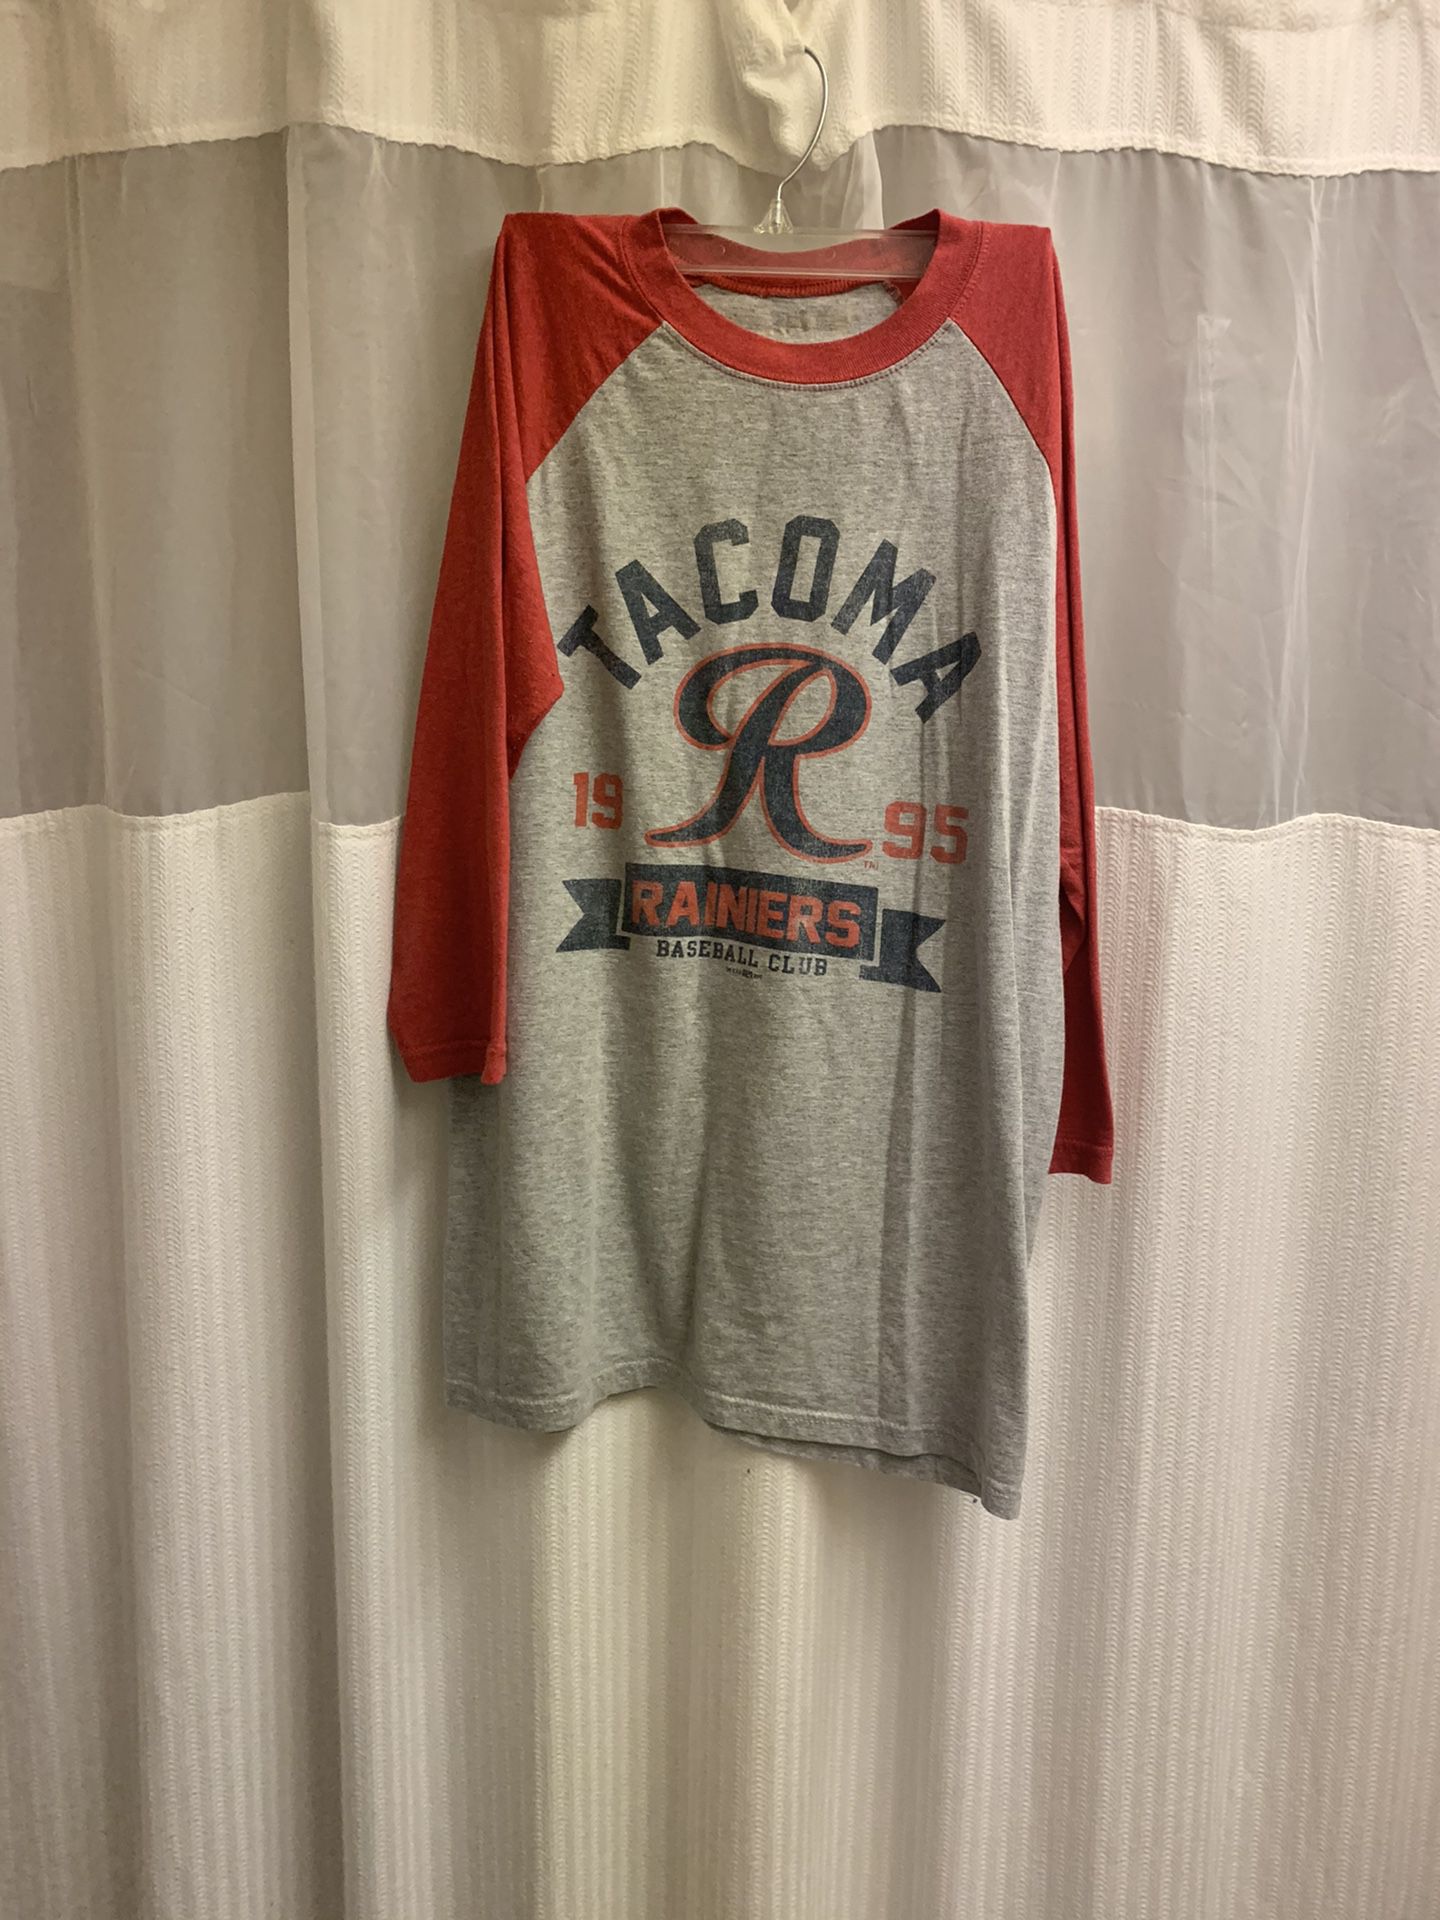 Tacoma Rainiers raglan baseball tee shirt top men size M EUC